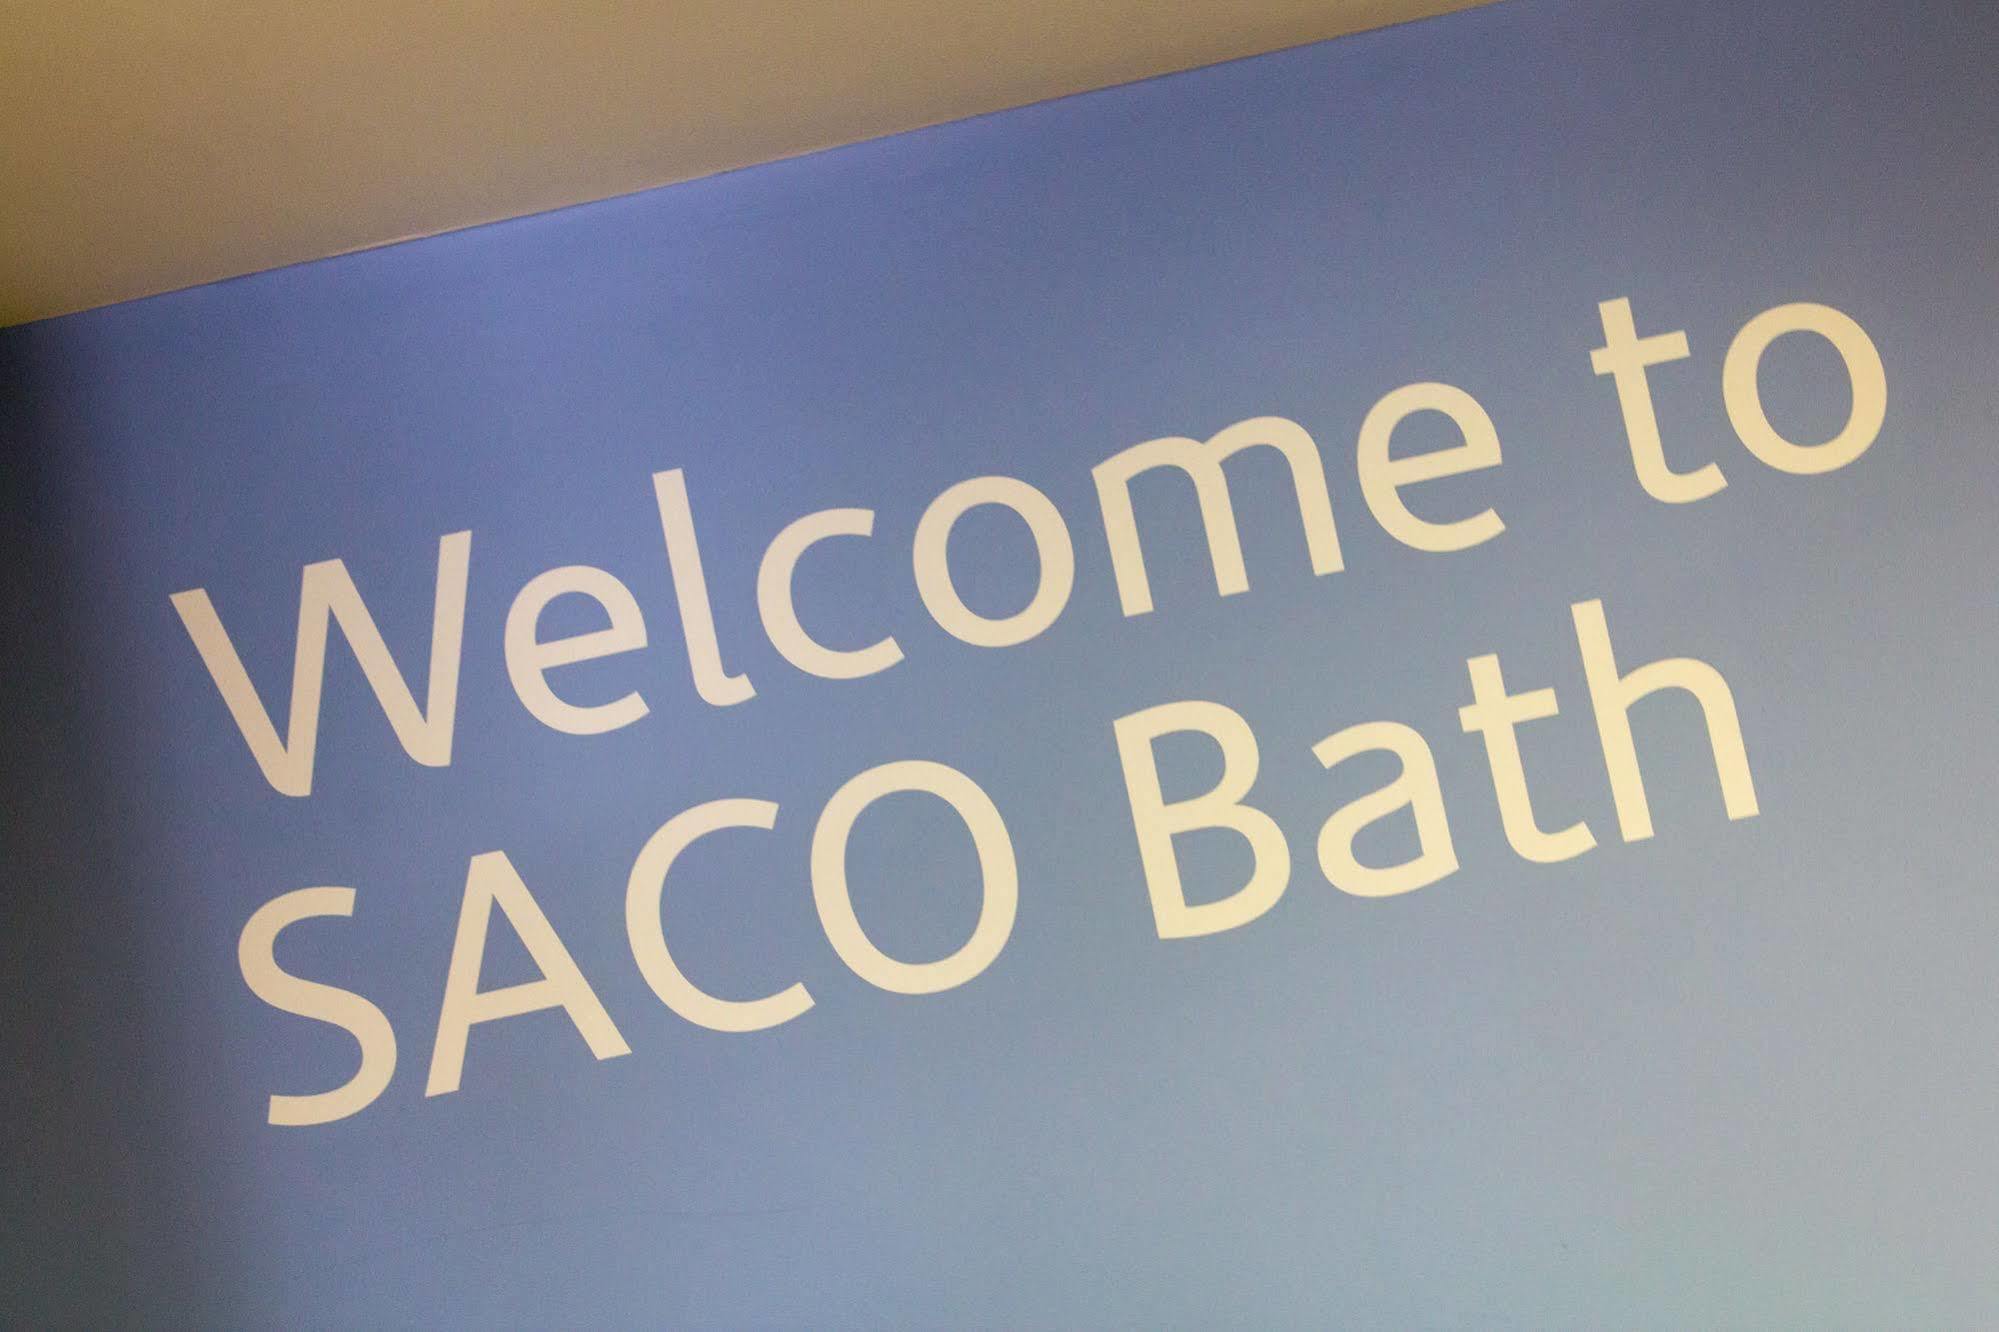 Saco Bath - St James Parade Екстер'єр фото